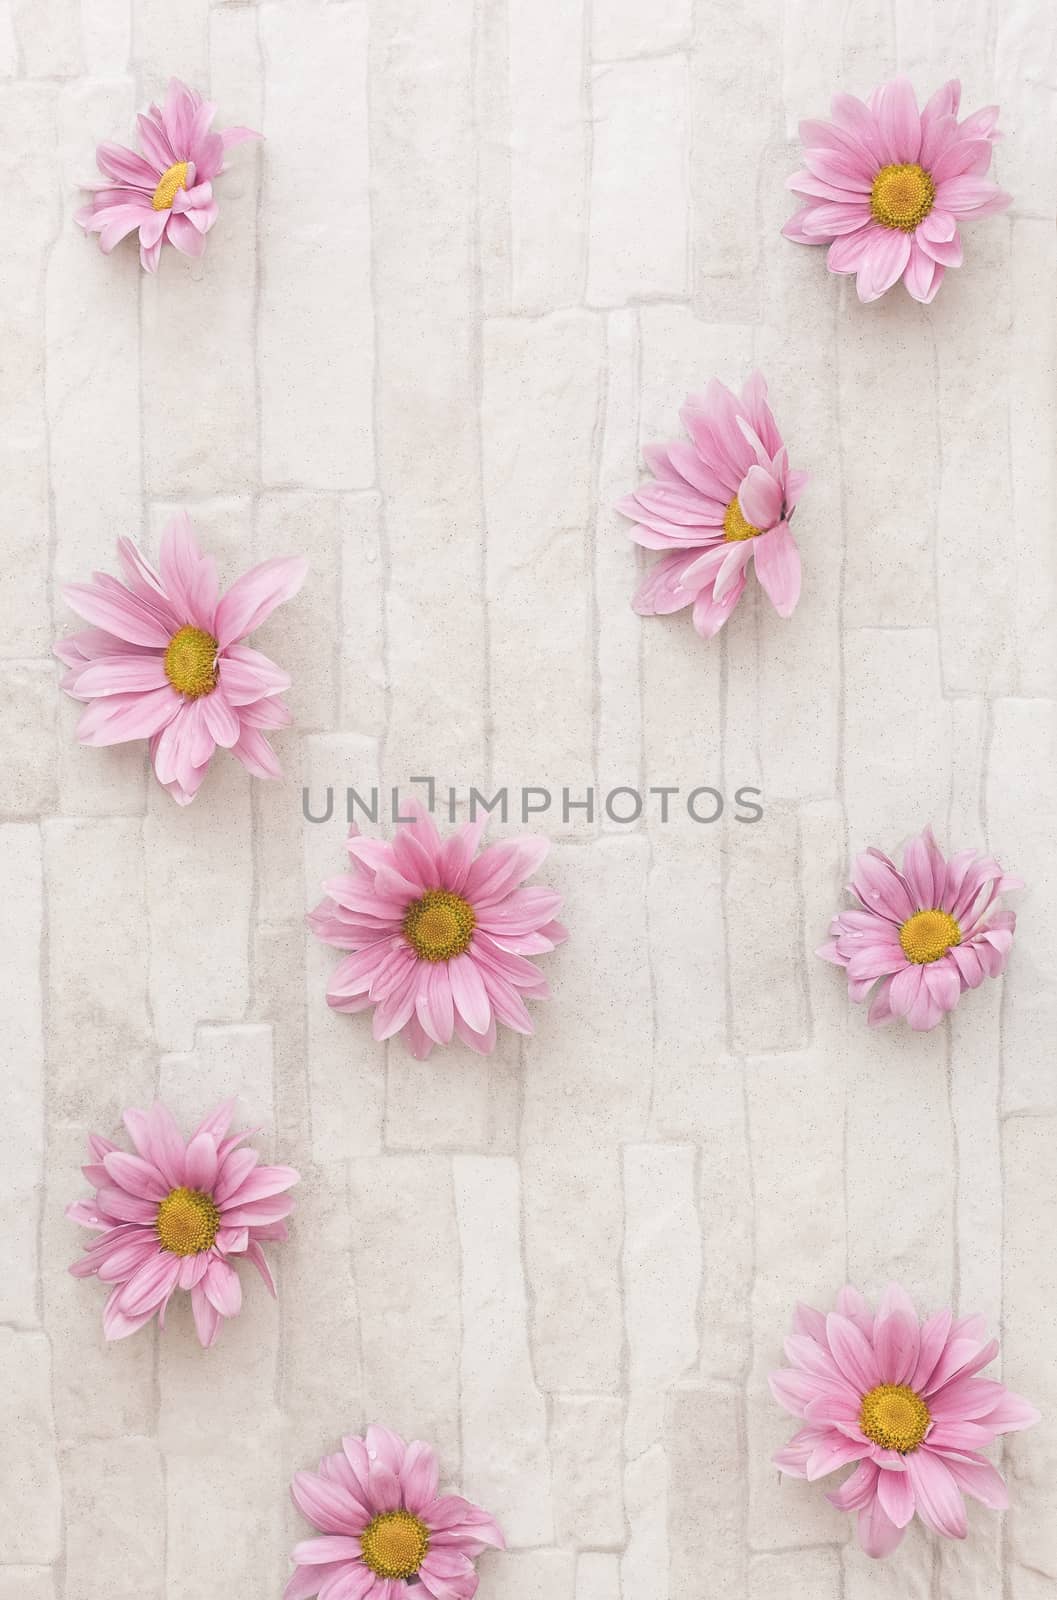 Chrysanthemum by Slast20